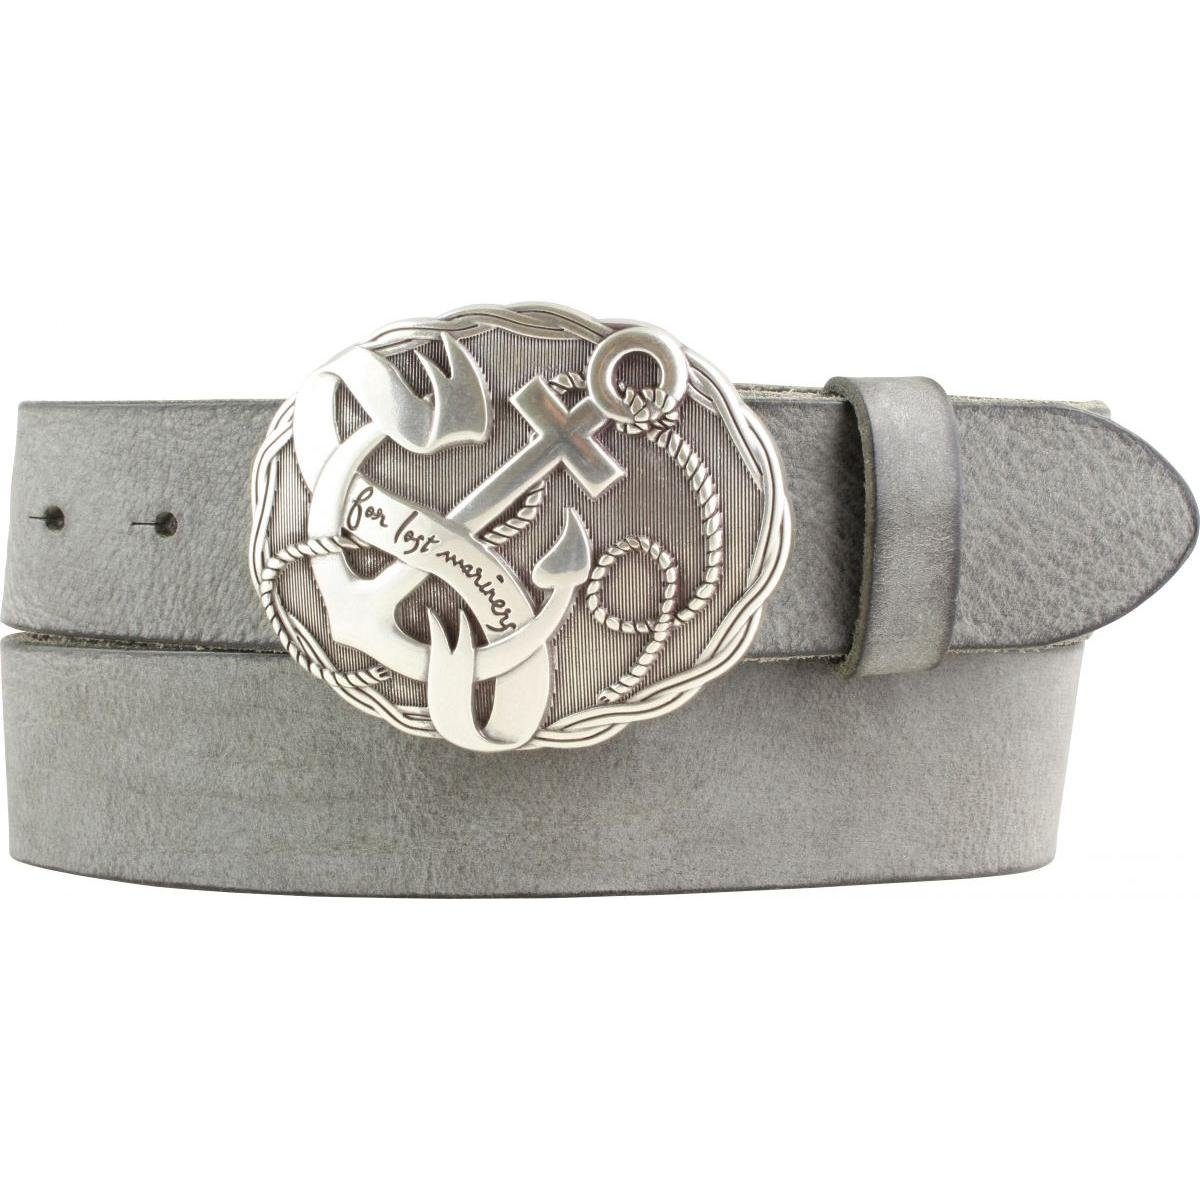 BELTINGER Ledergürtel Gürtel mit Anker-Gürtelschnalle aus weichem Vollrindleder 4 cm Used-Lo Dunkelgrau, Silber